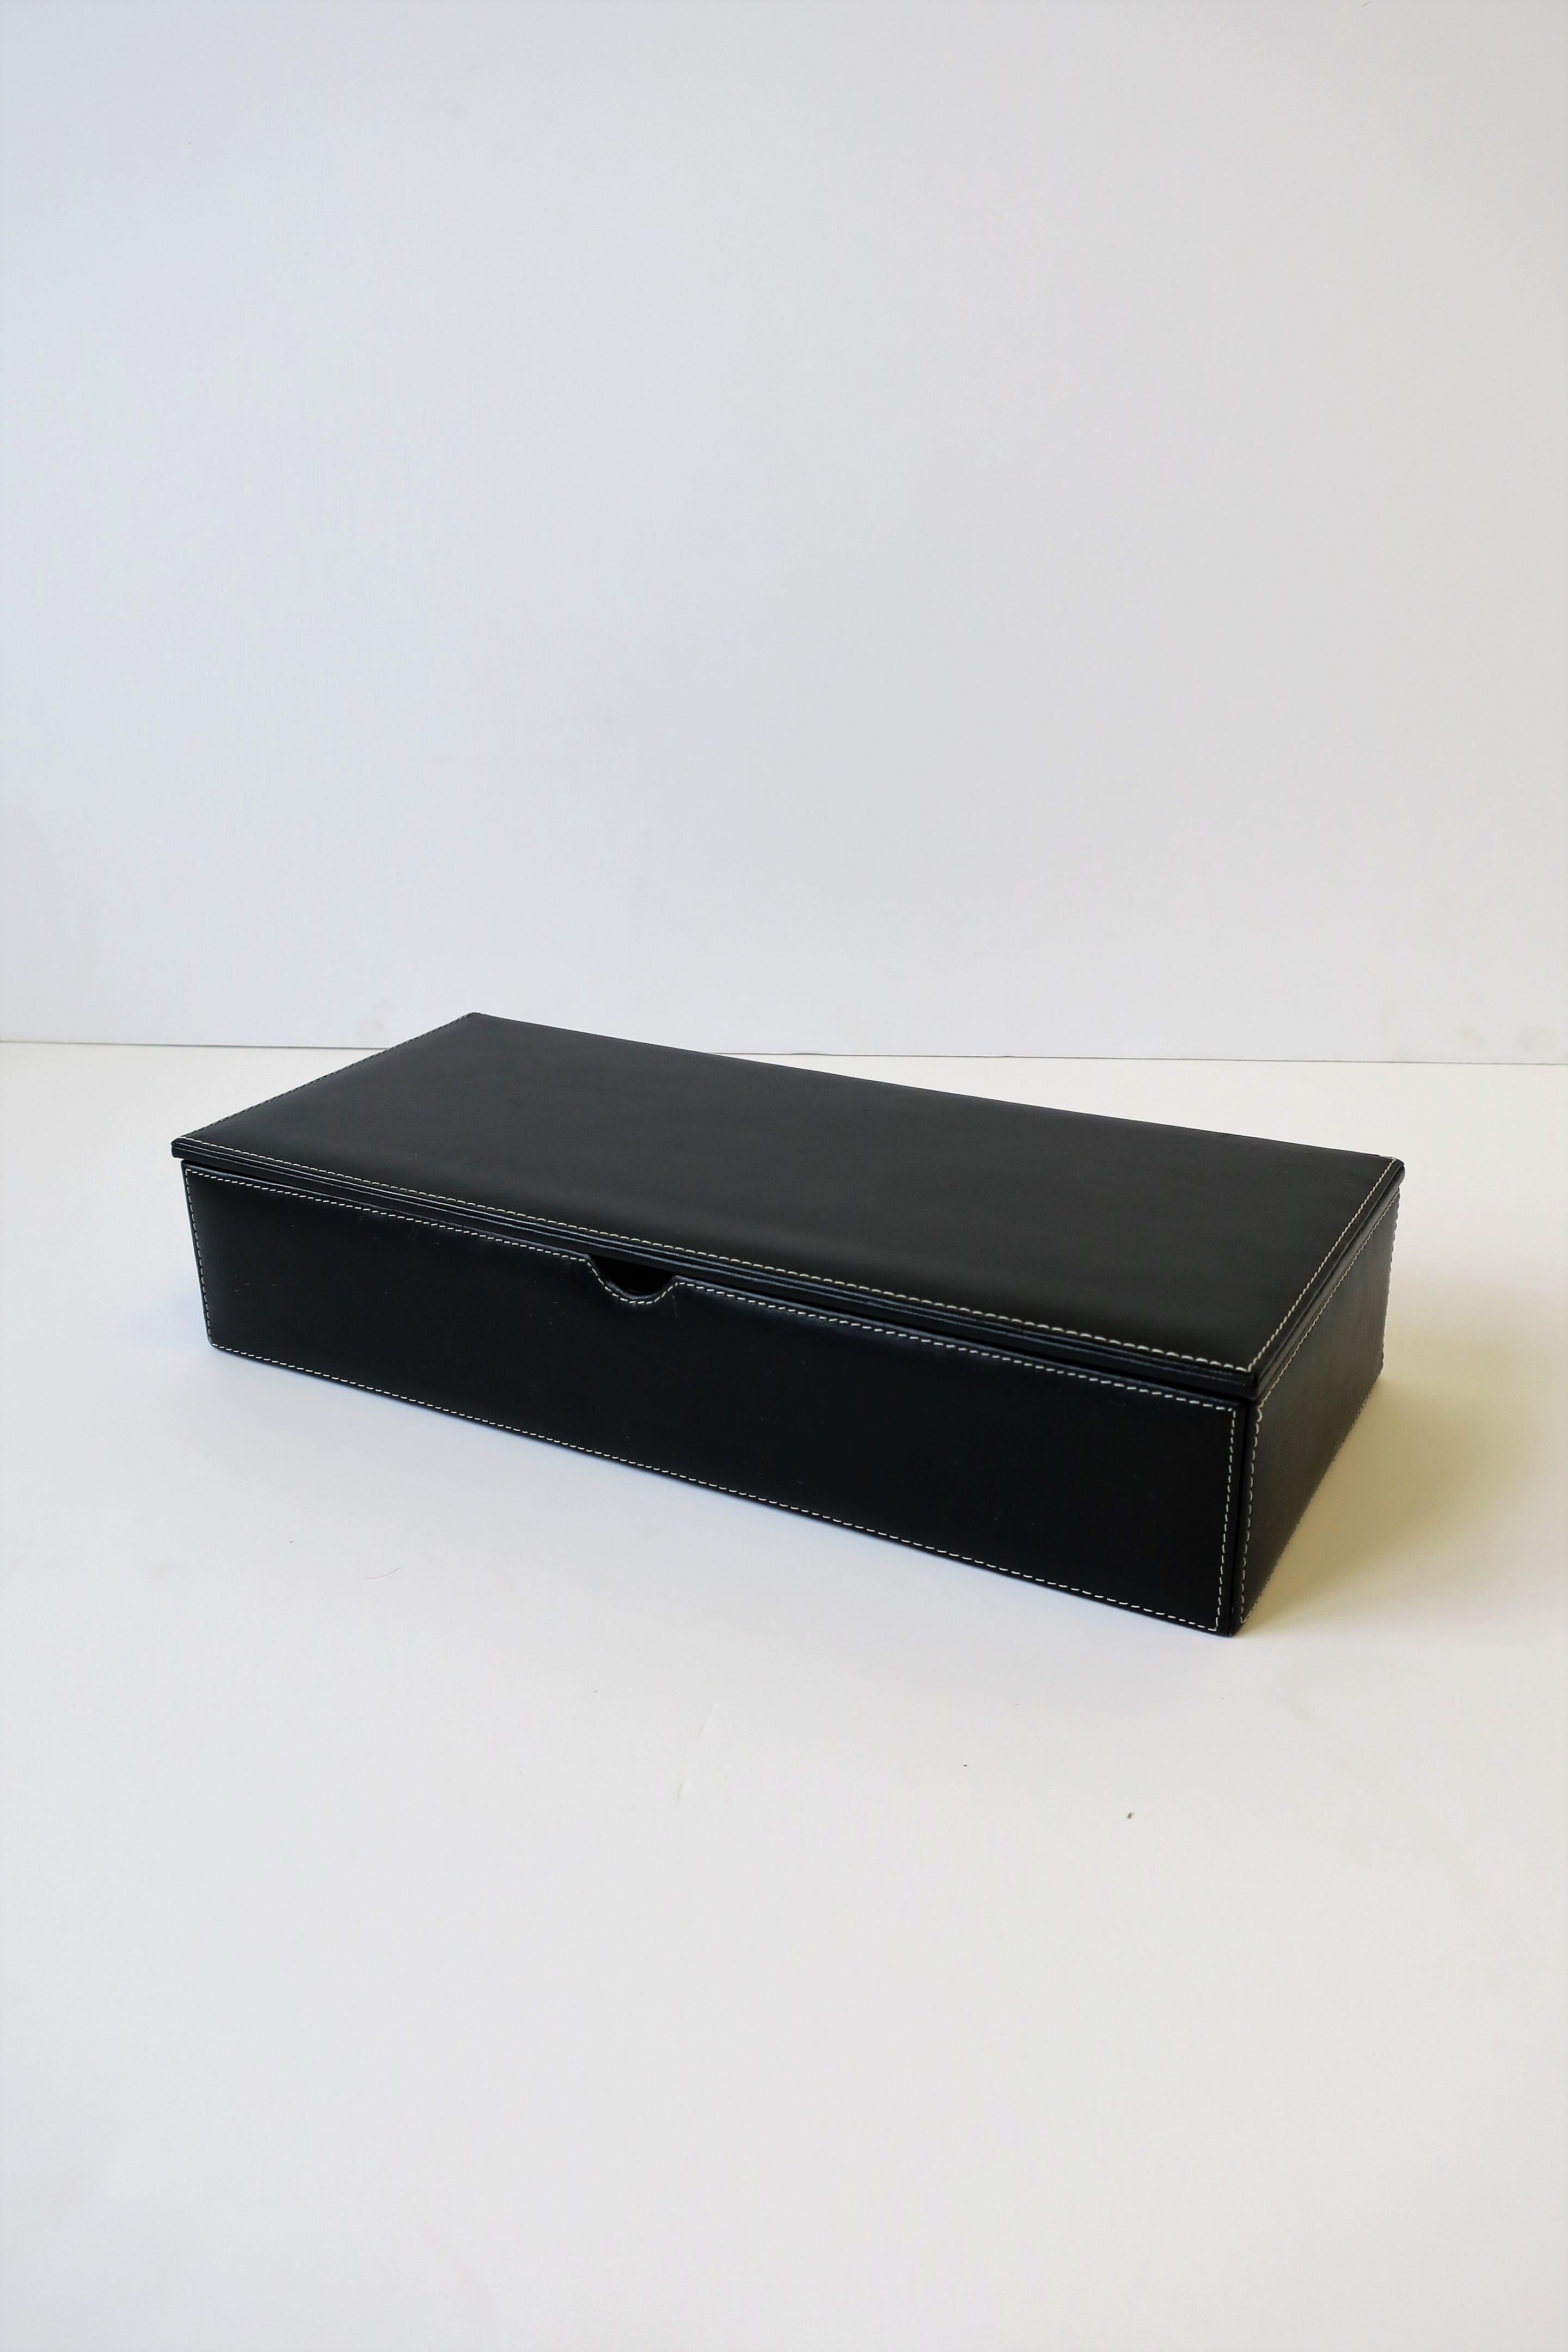 Minimalist Black Leather Jewelry or Desk Box